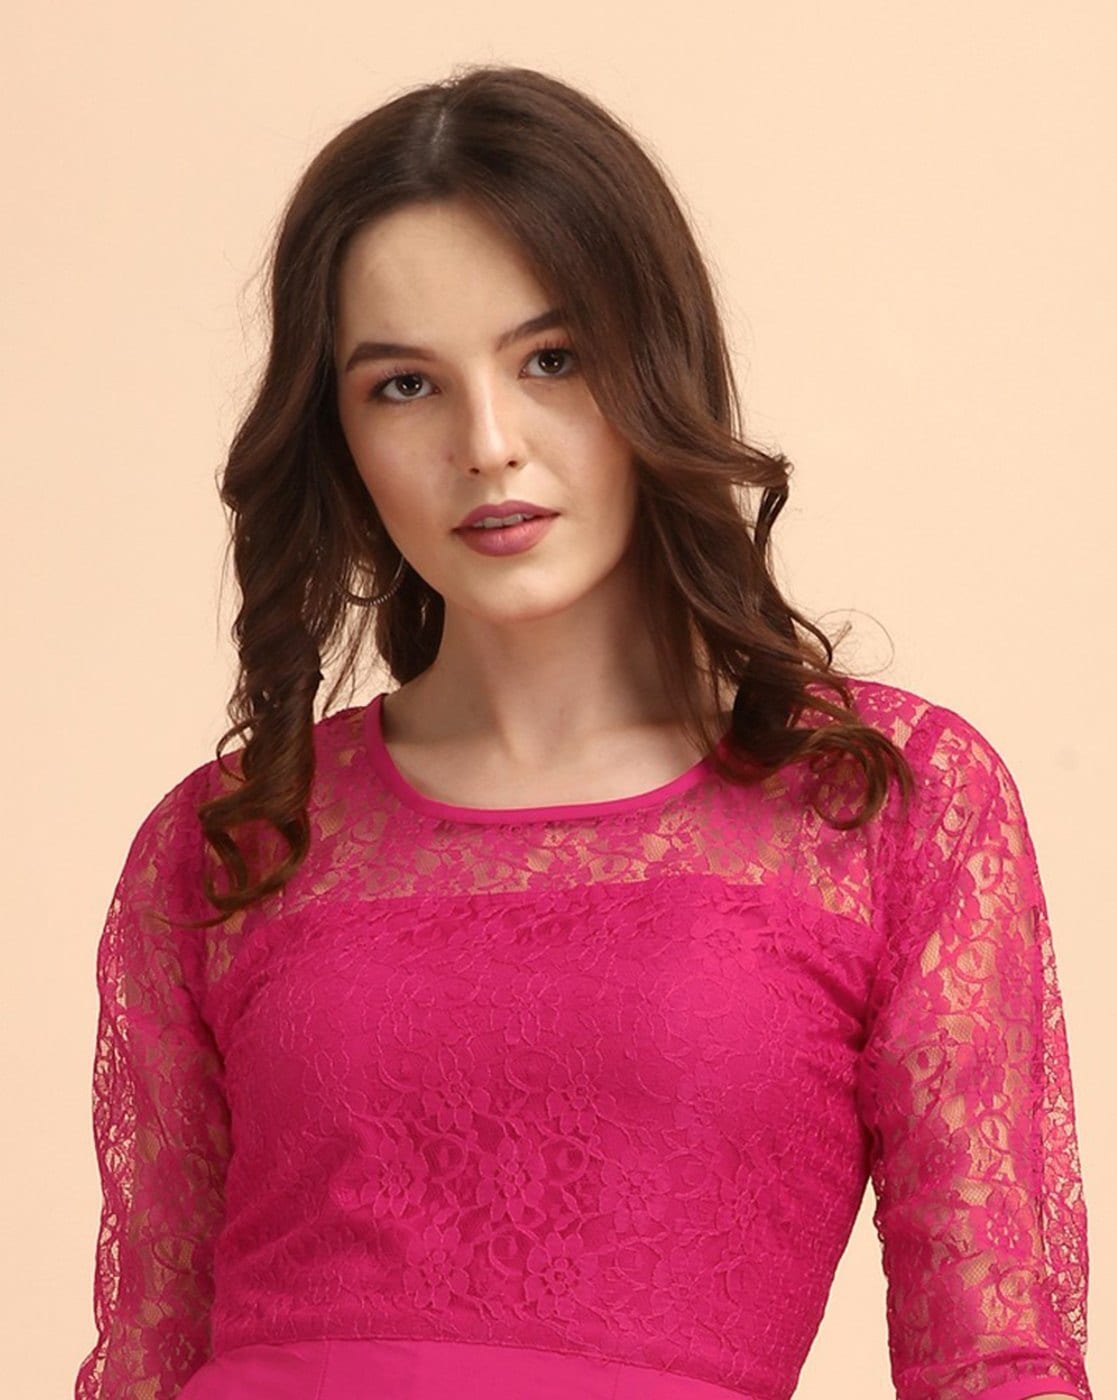 Hot Pink Lace One Shoulder Maxi Dress – iwearmystyle